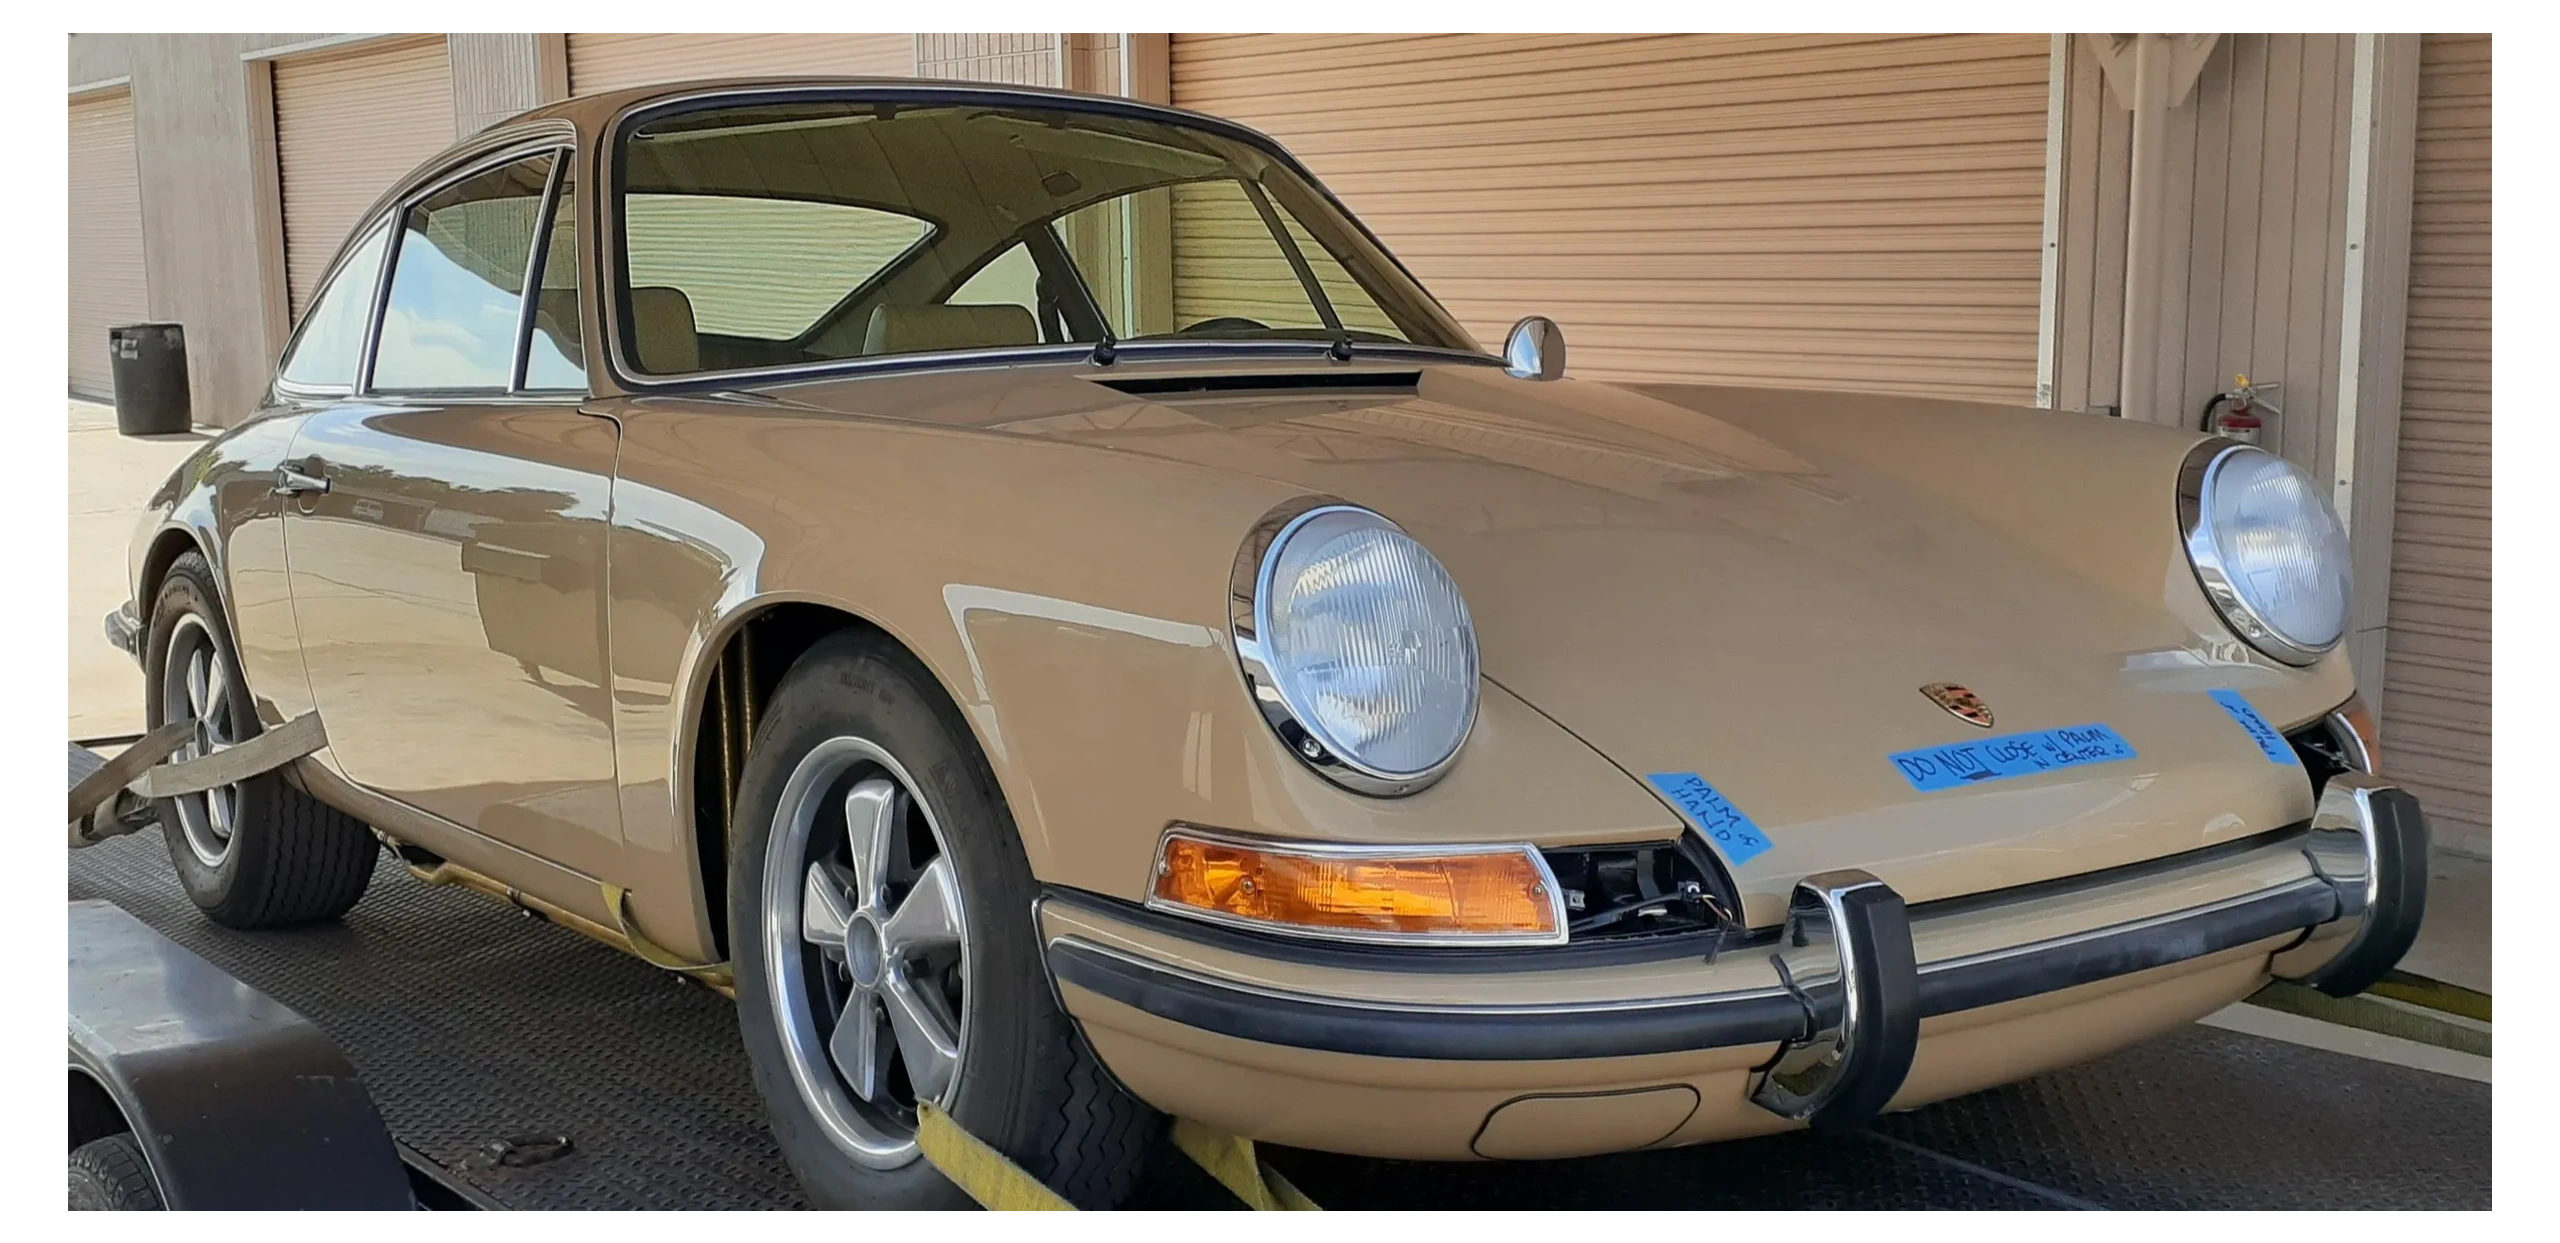 JuniorsRestorations.com car restoration,
Porsche vintage Porsche restoration,
vehicle restorations